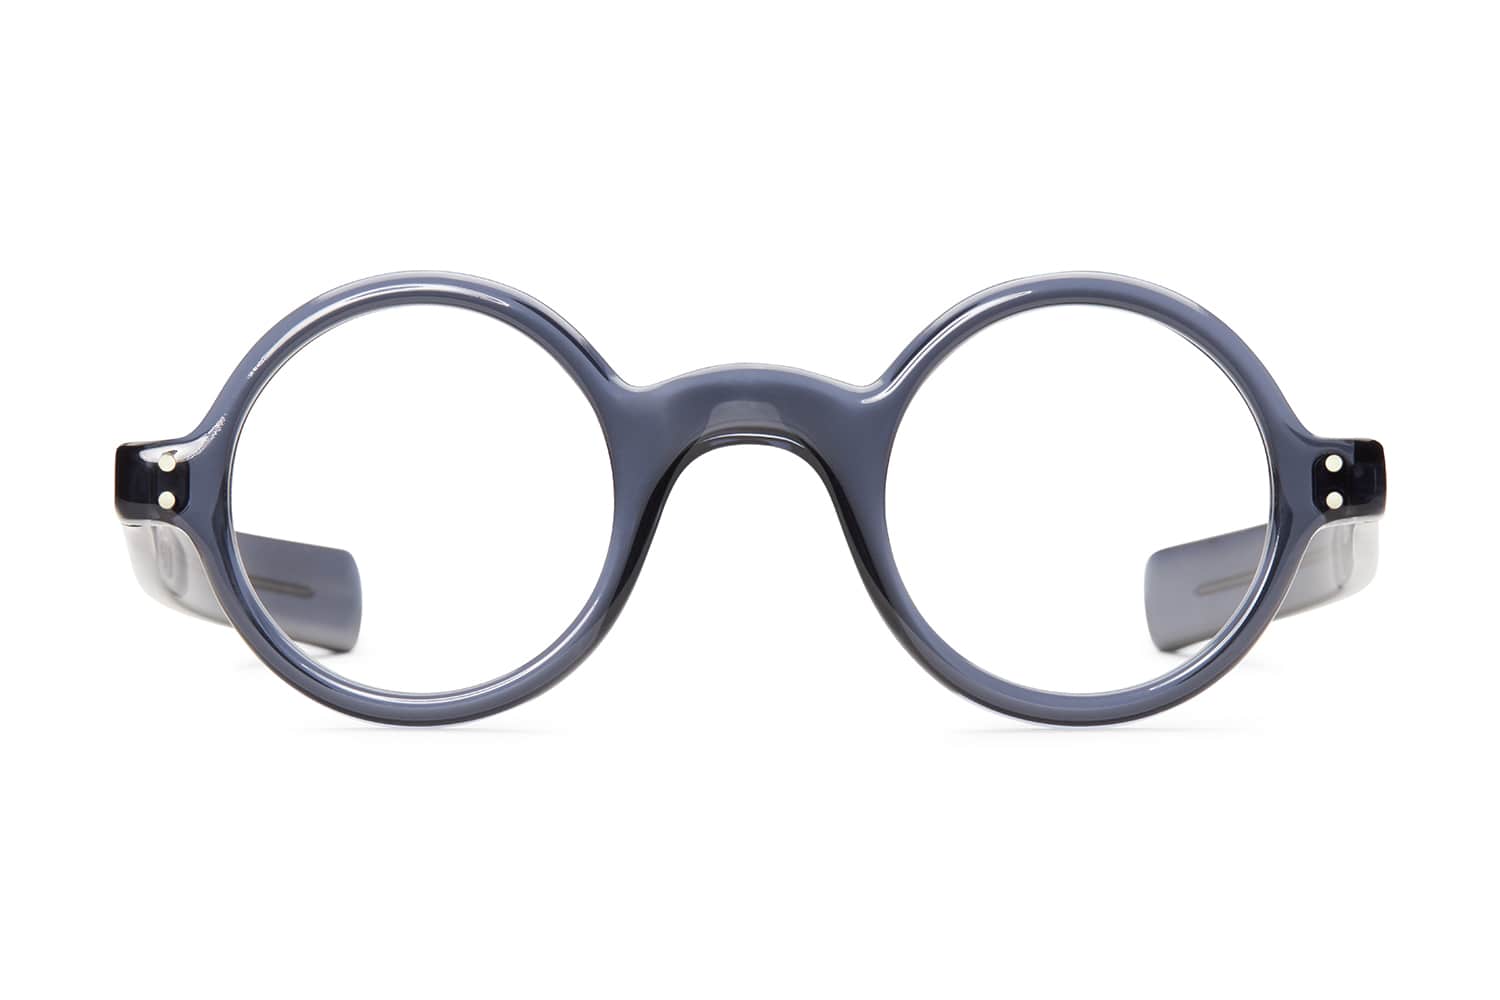 SACHA - Meyrowitz eyeglasses - Meyrowitz opticians and eyewear 